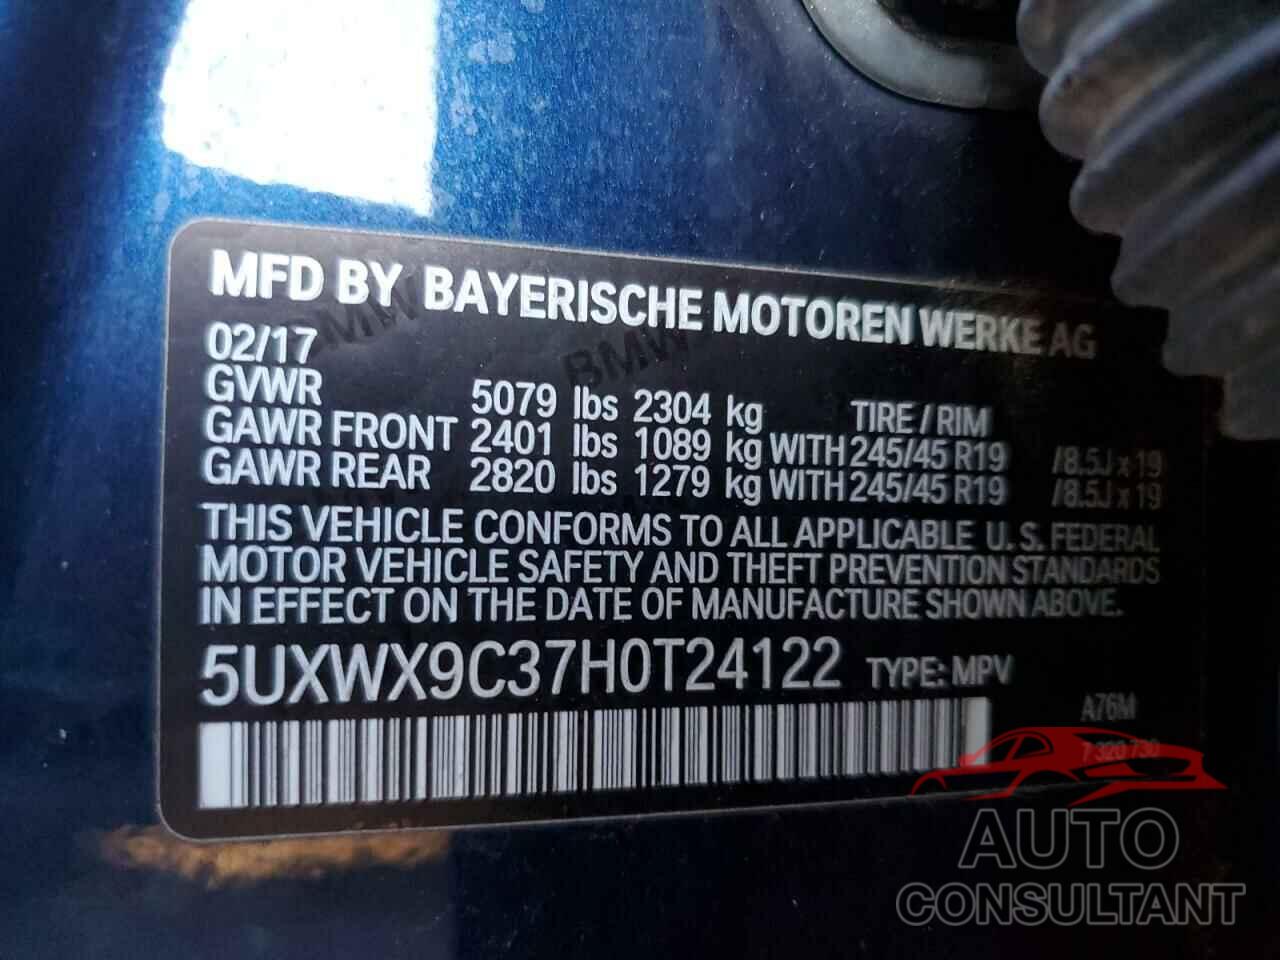 BMW X3 2017 - 5UXWX9C37H0T24122